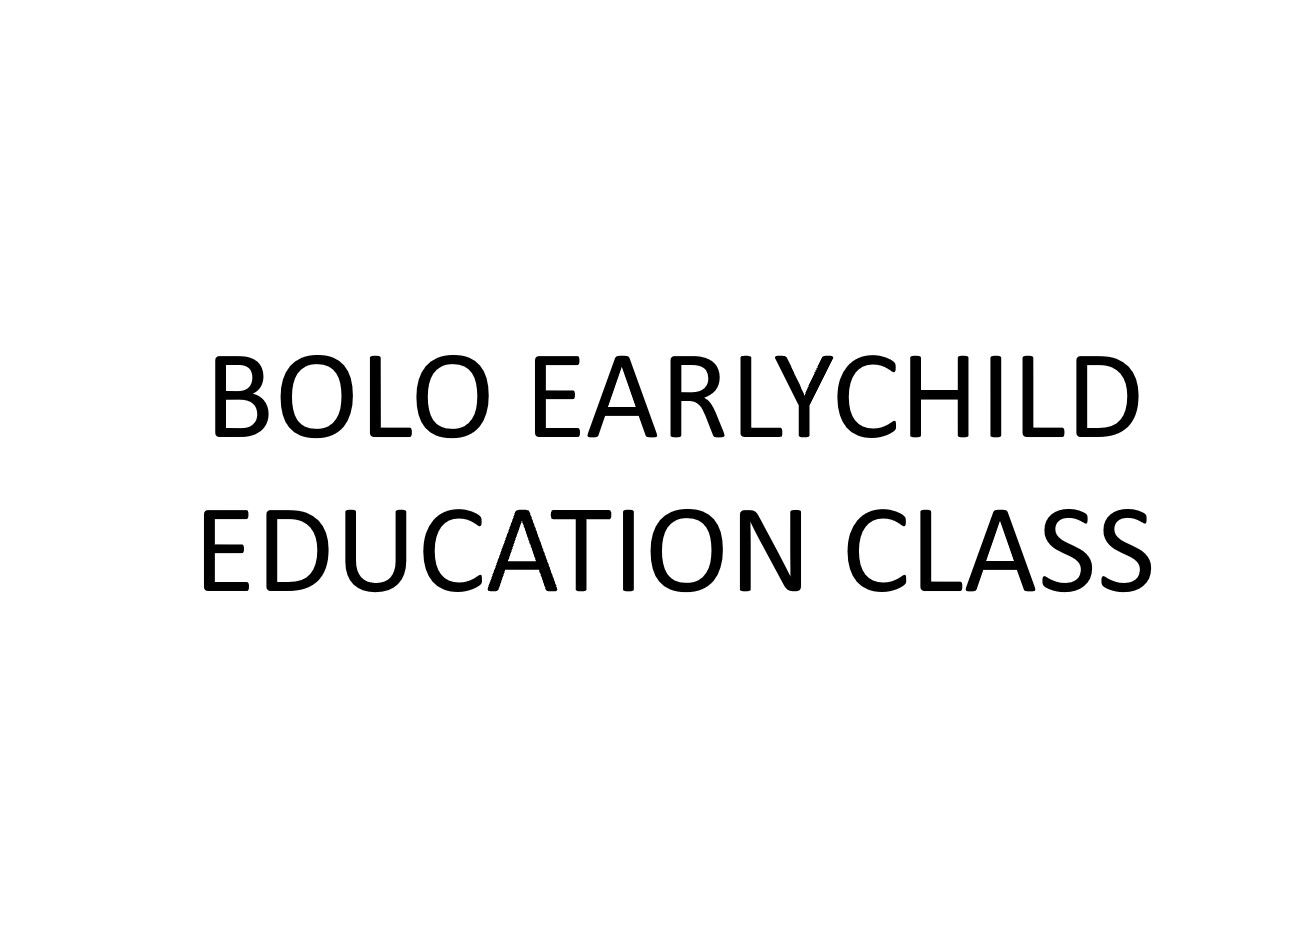 BOLO EARLYCHILD EDUCATION CLASS